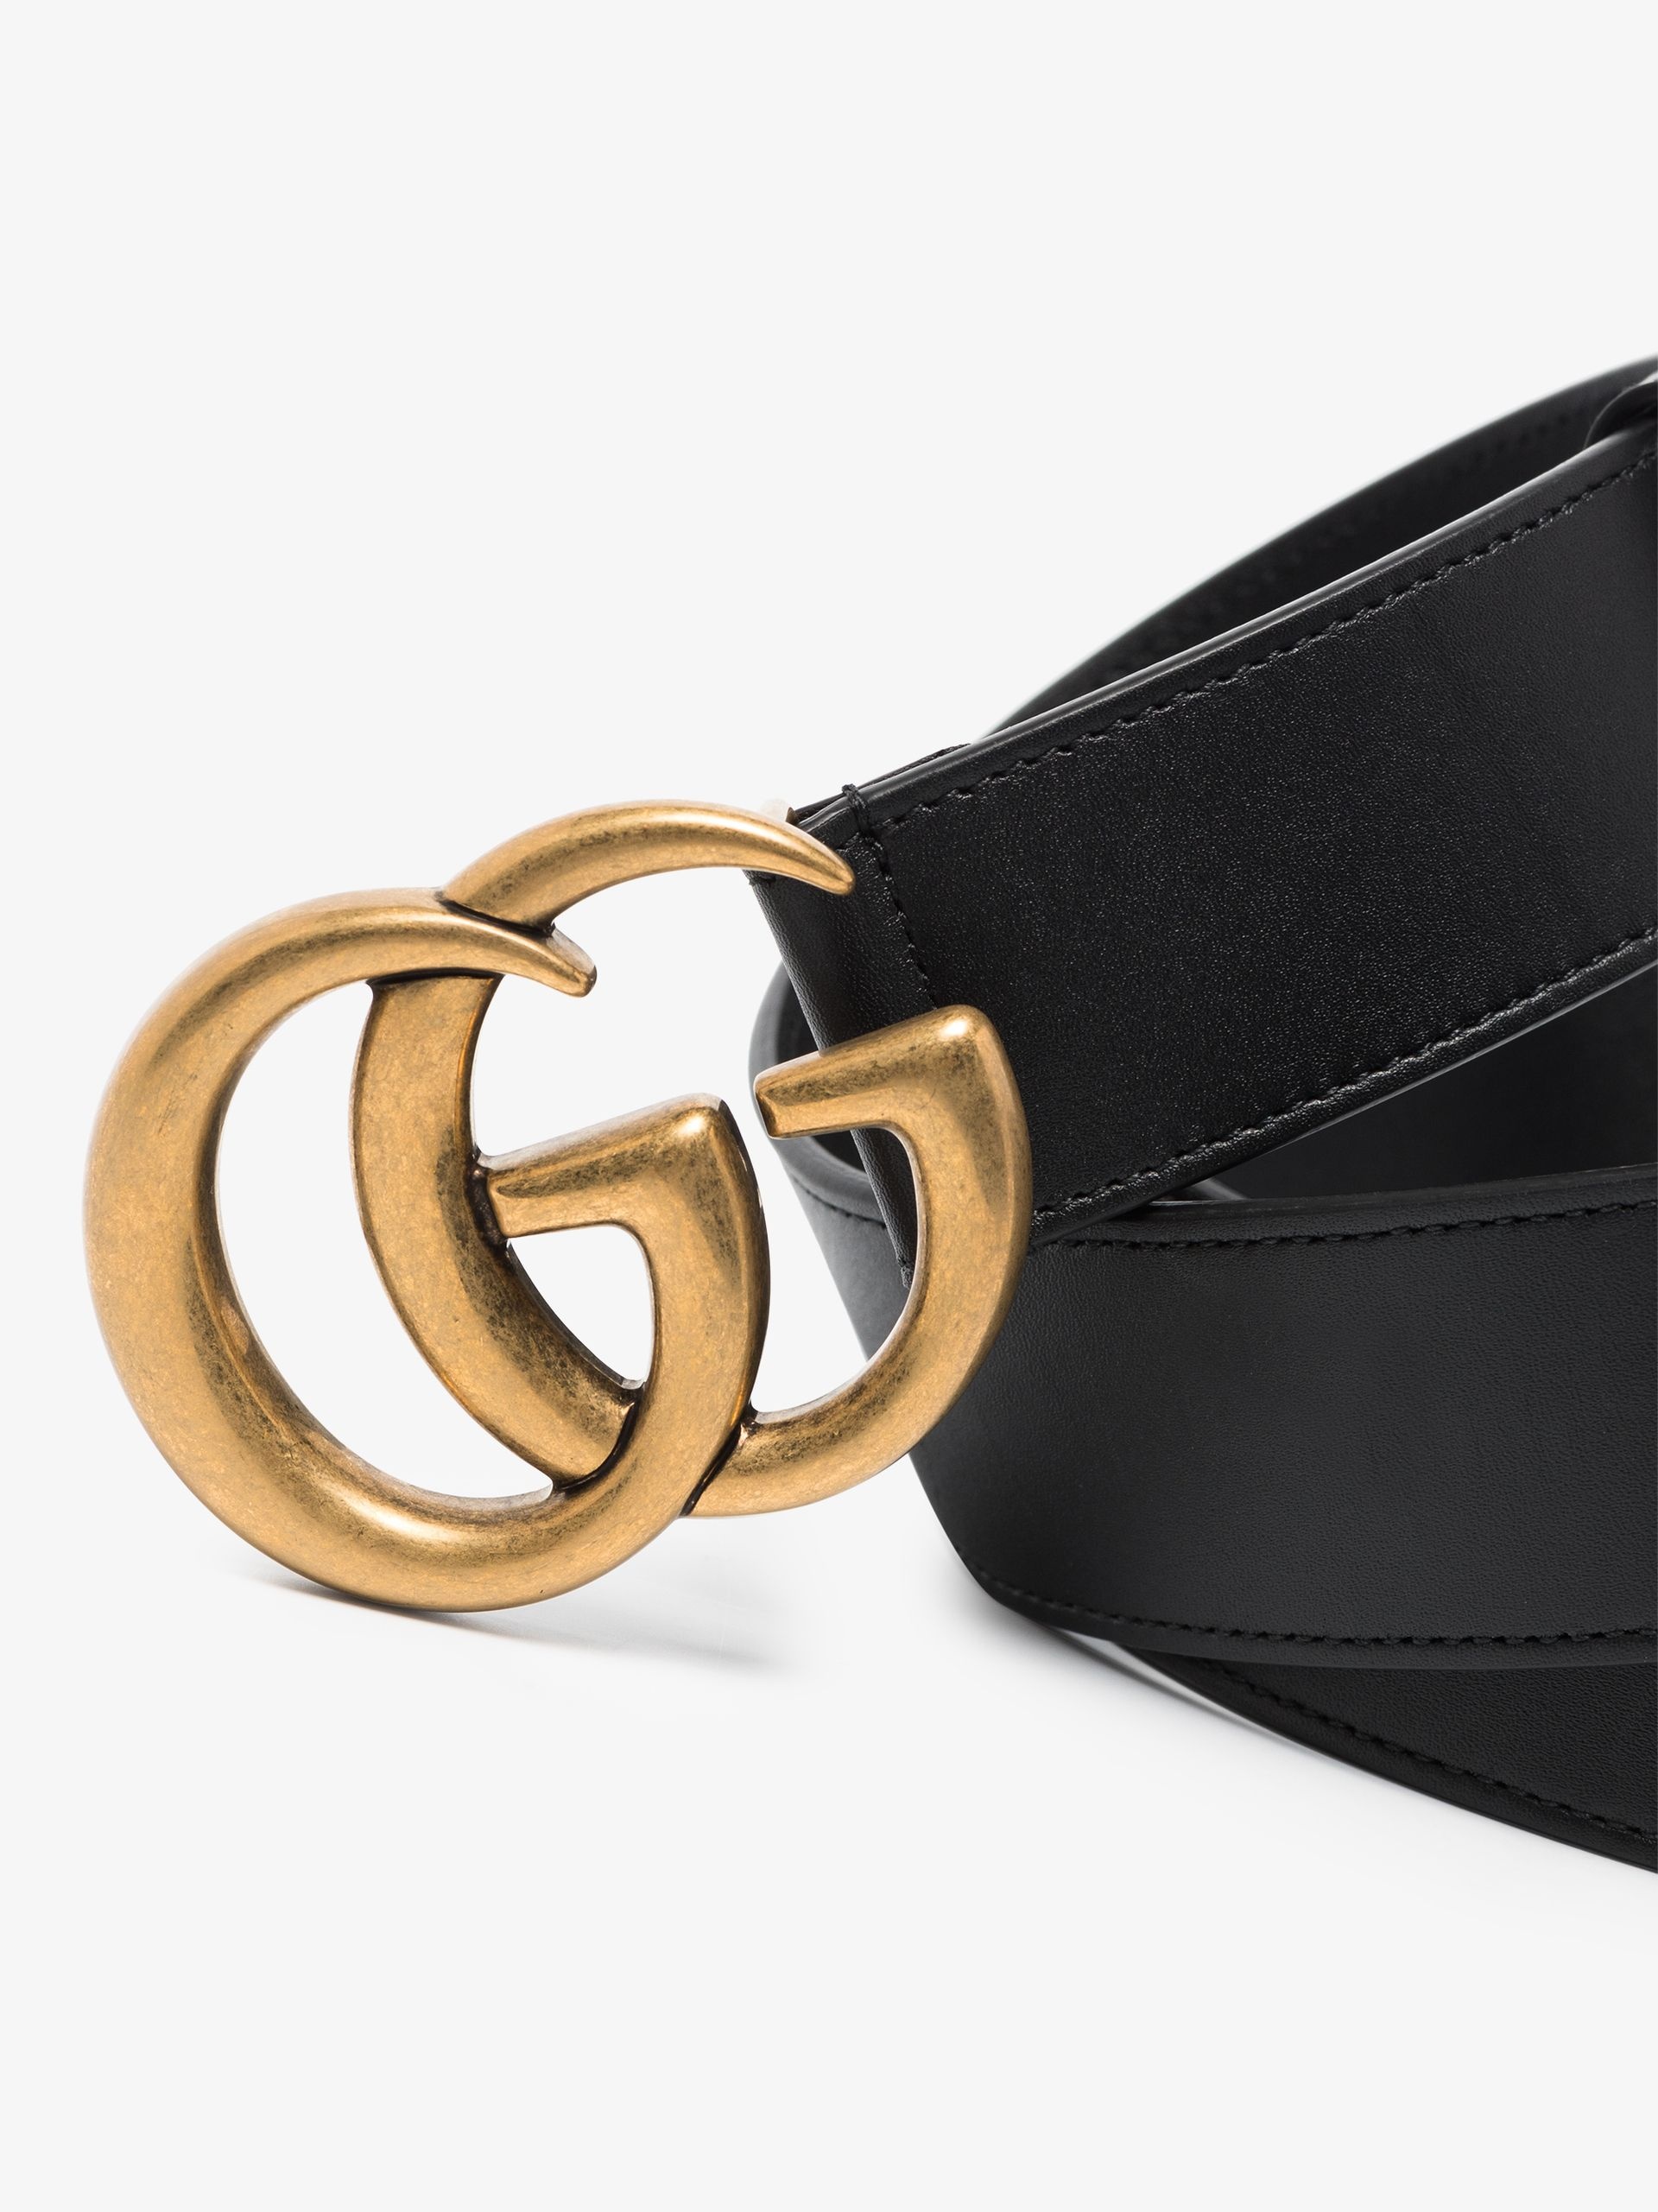 Black GG Marmont Leather Belt - 3